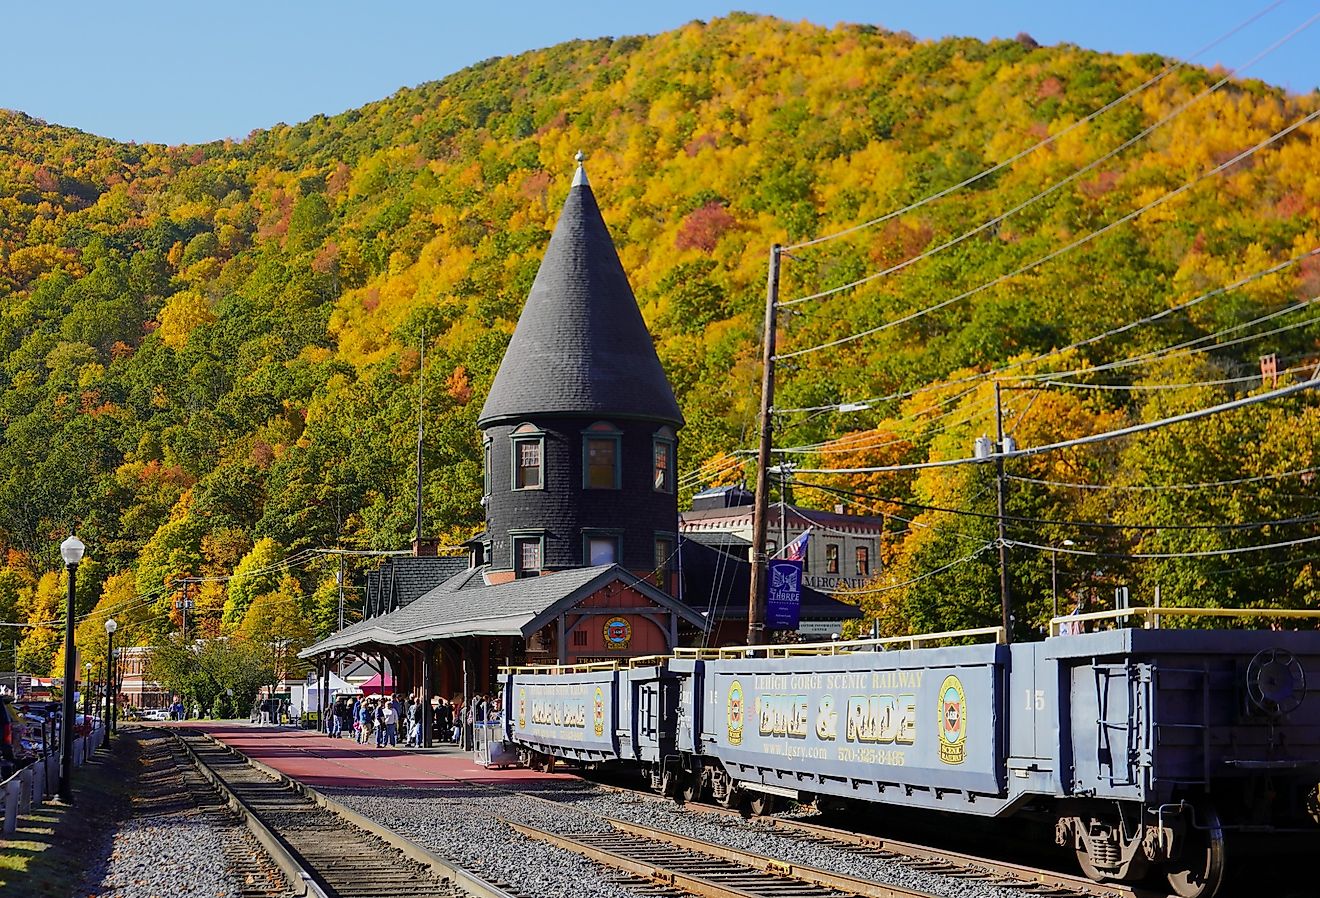 Jim Thorpe, Pennsylvania, Lehigh Gorge Scenic Railway in autumn. Image credit PT Hamilton via Shutterstock